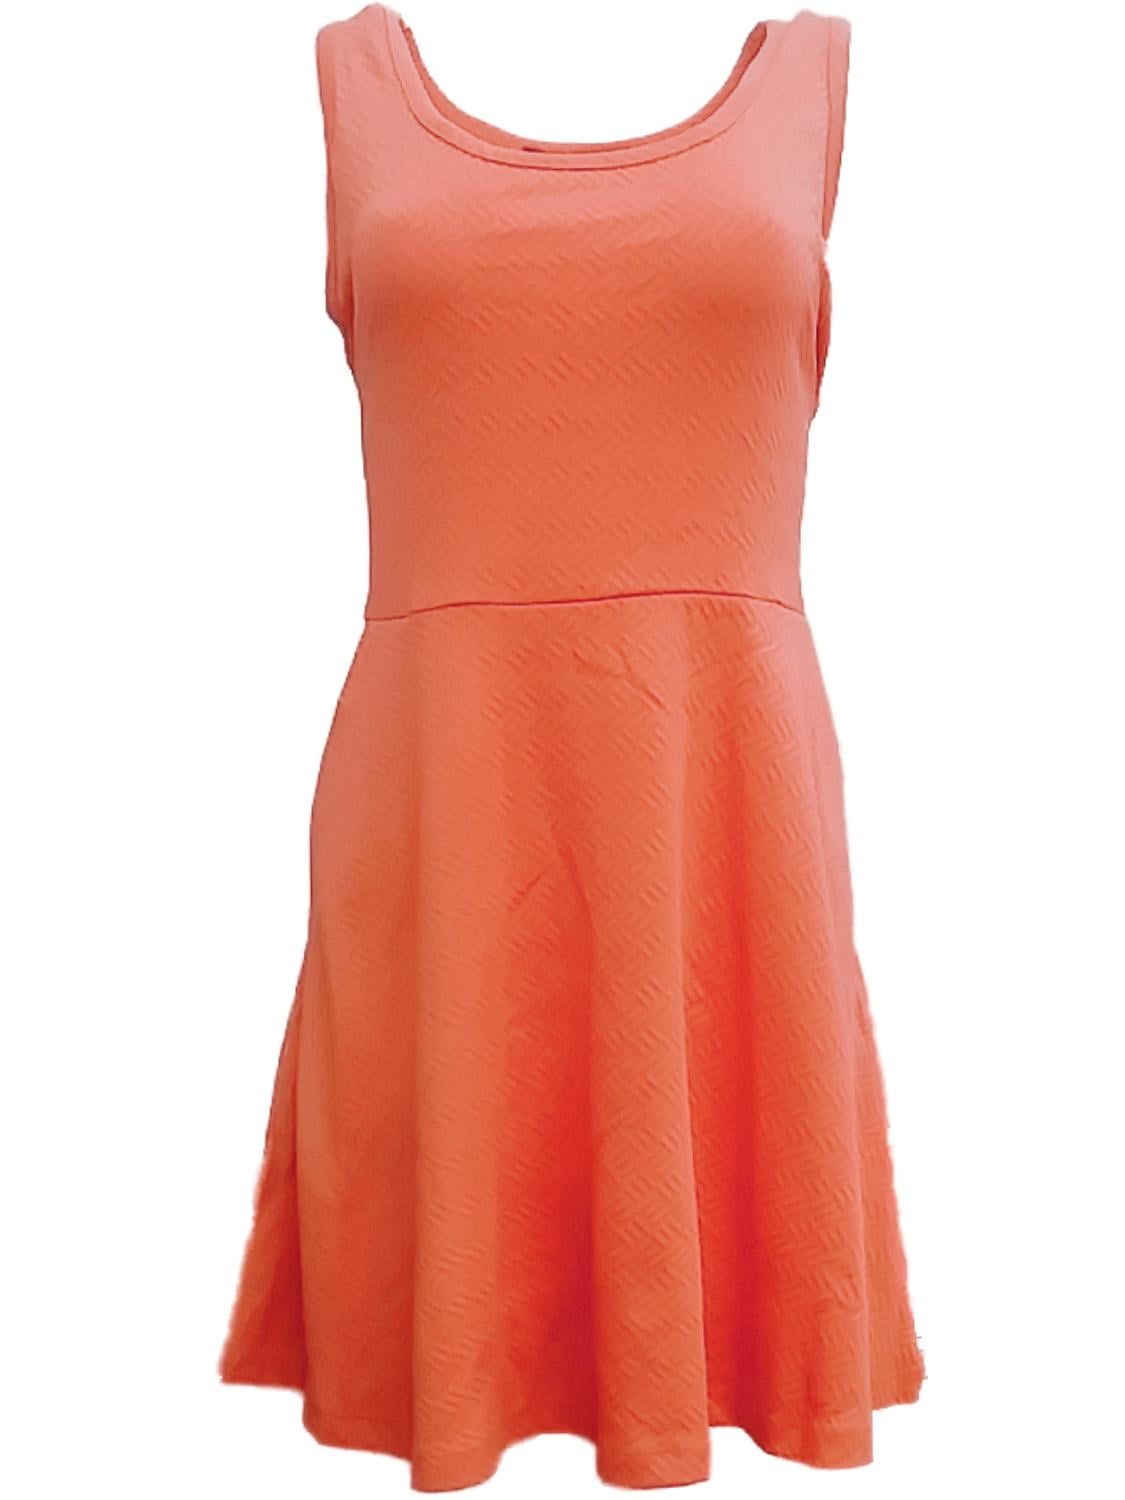 orange tank top dress